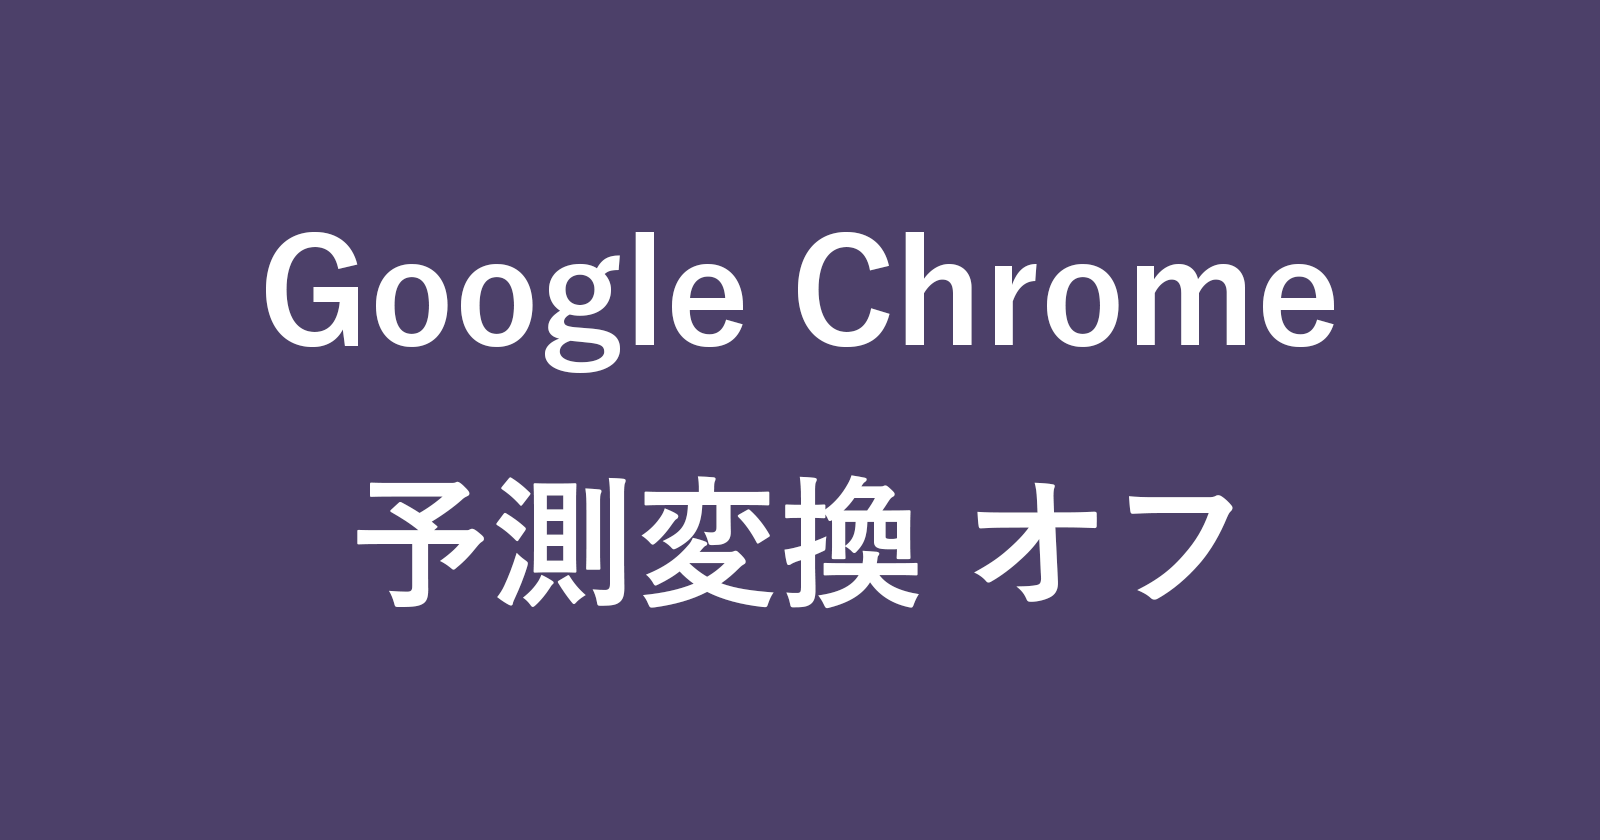 google chrome autocomplete